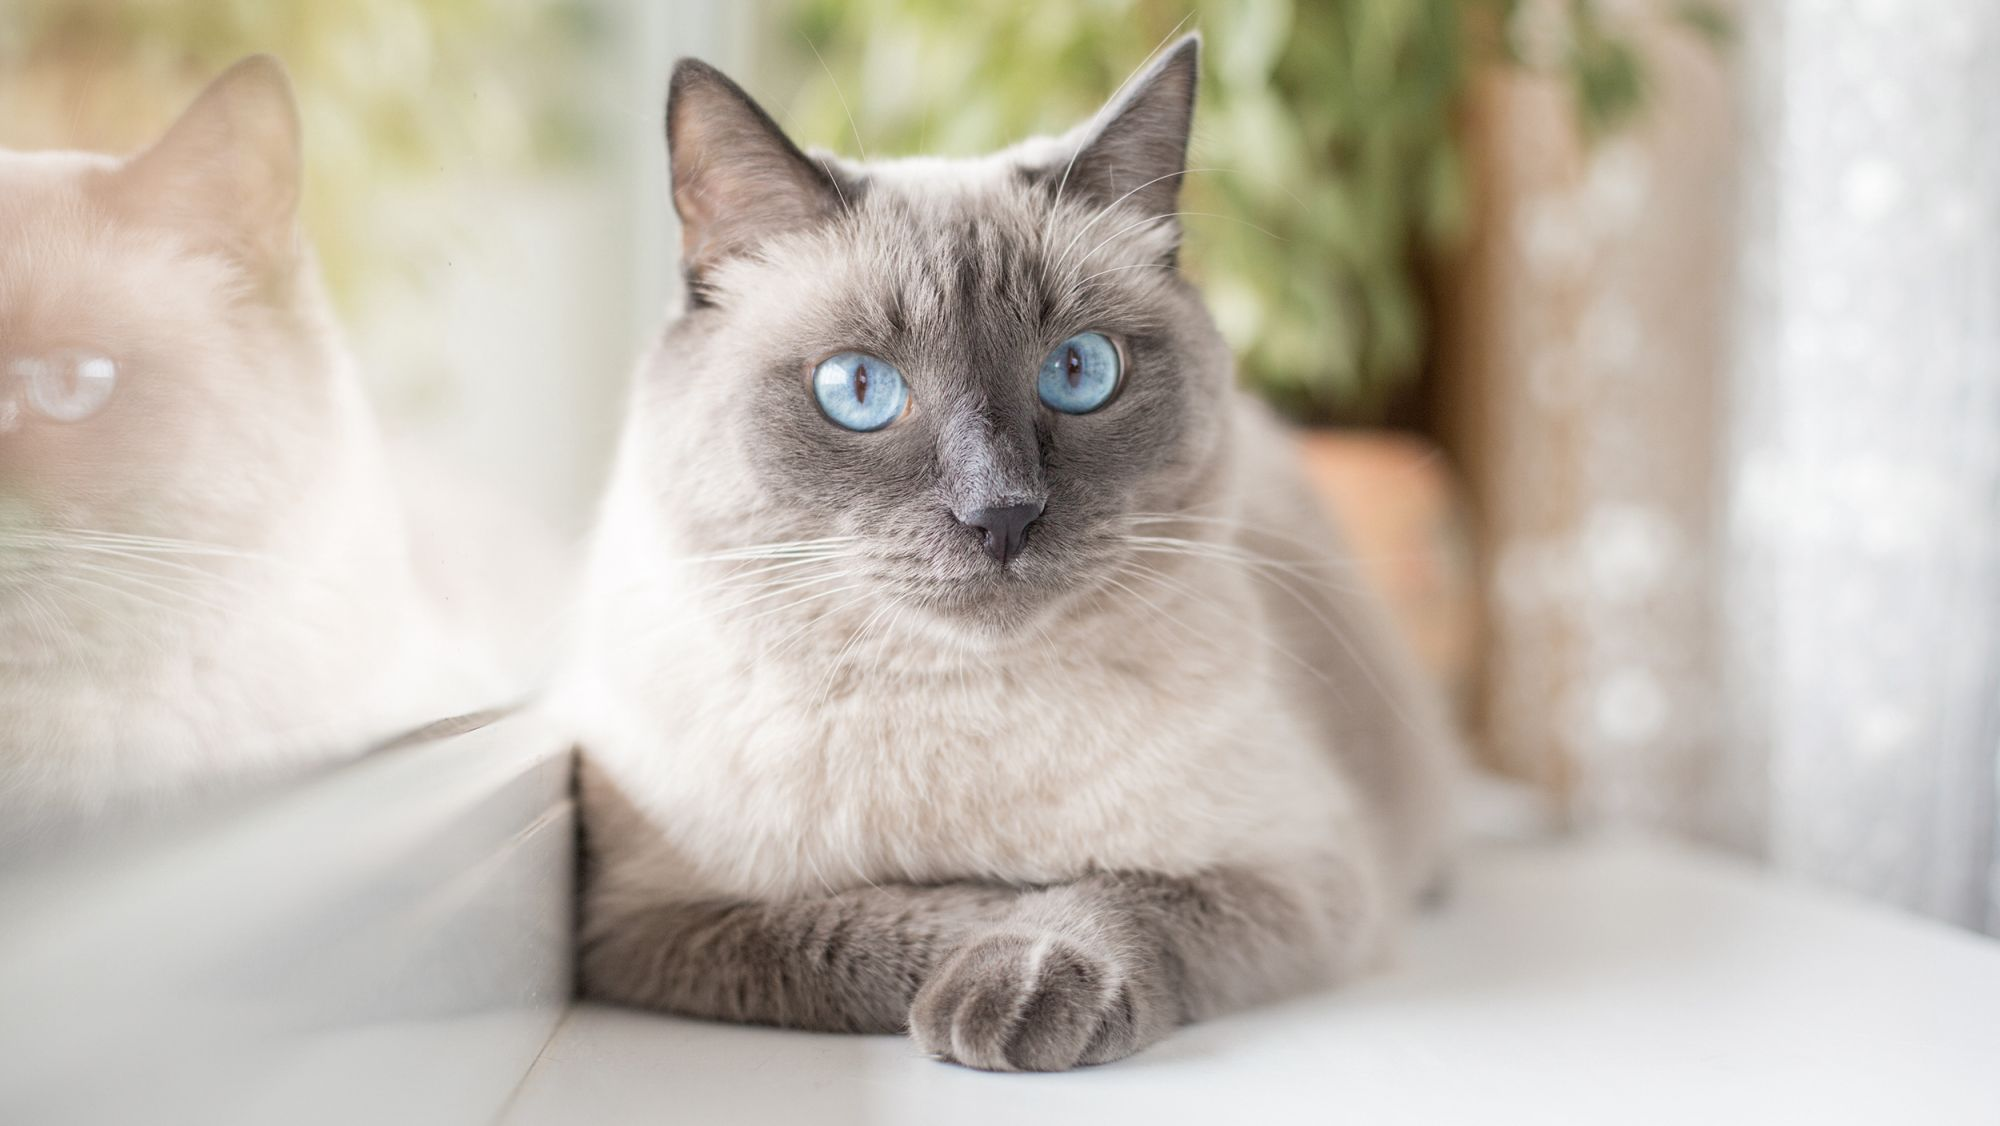 Gray cat with blue eyes sitting on window ledge